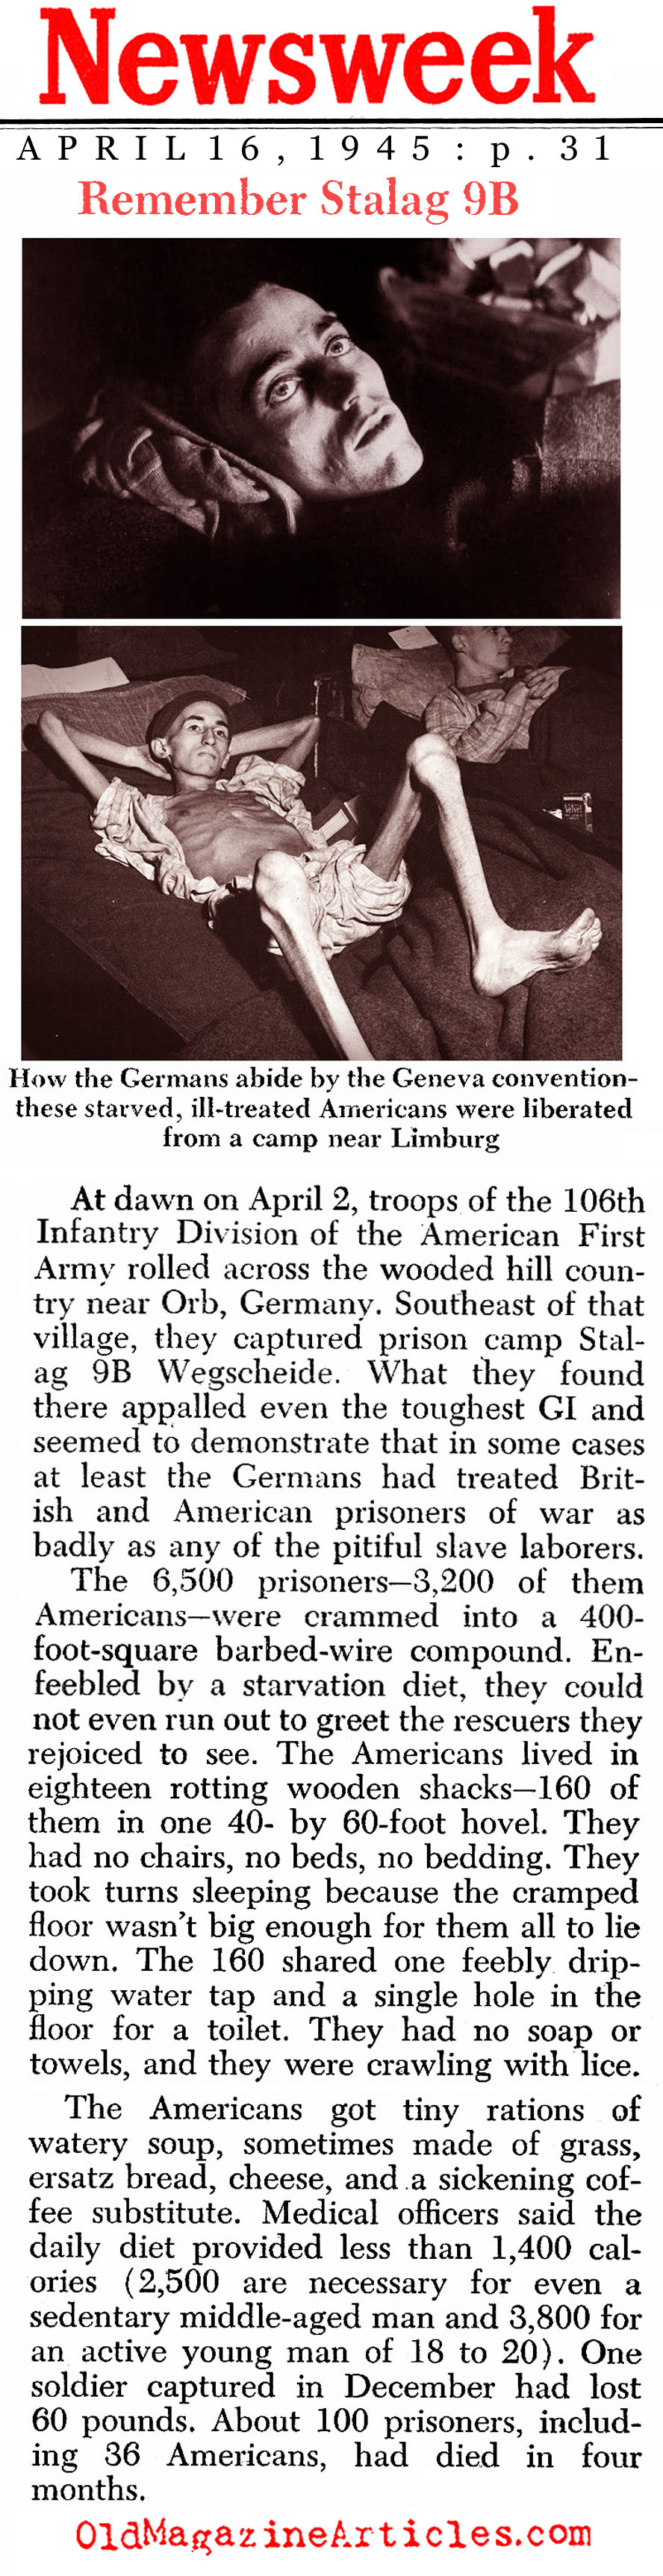 Nightmare At Stalag IXB (Newsweek Magazine, 1945)